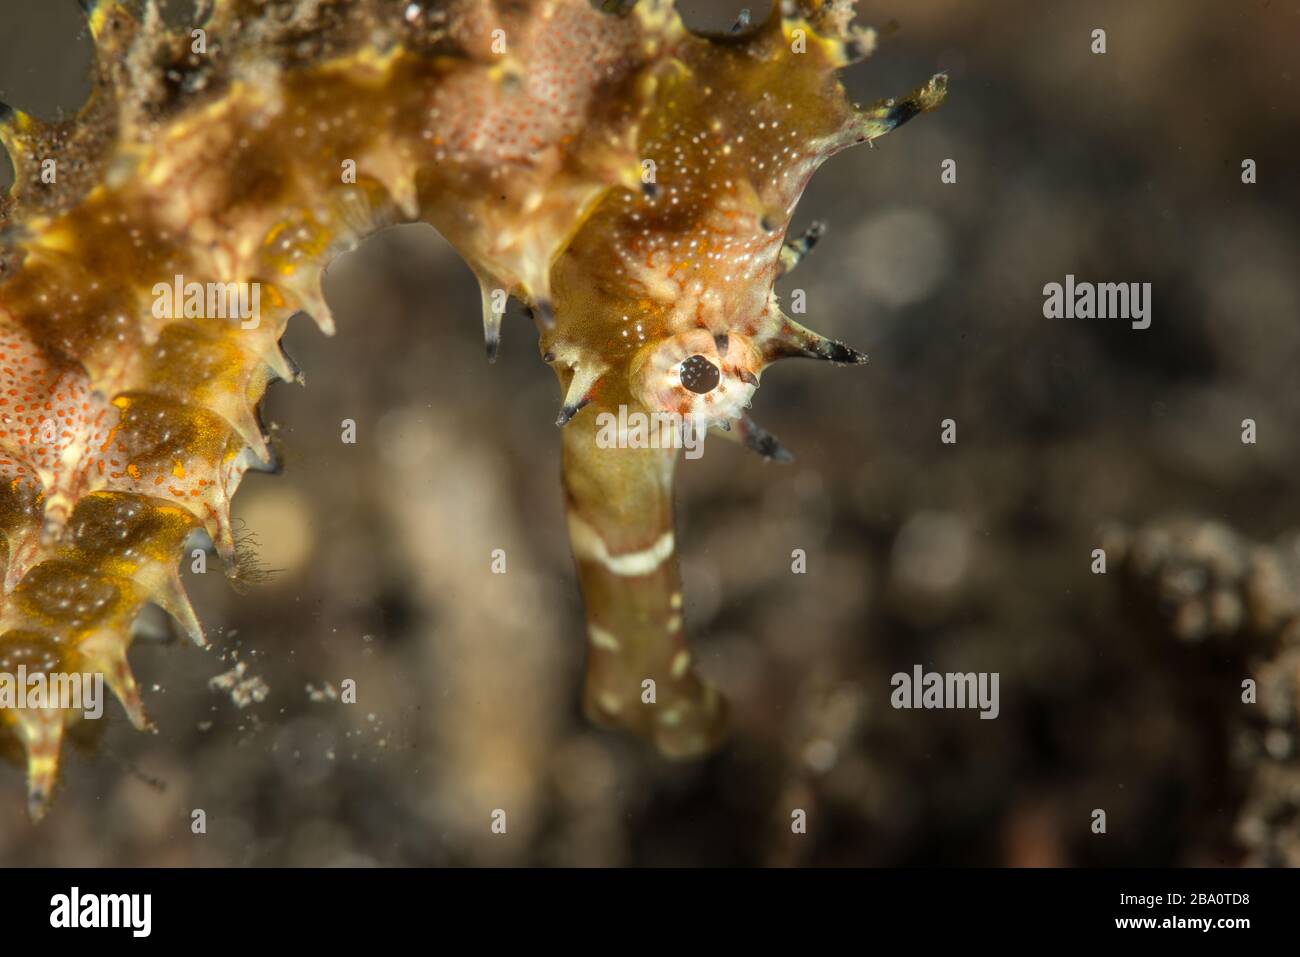 Critters of Lembeh - Fotografia macro subacquea Foto Stock